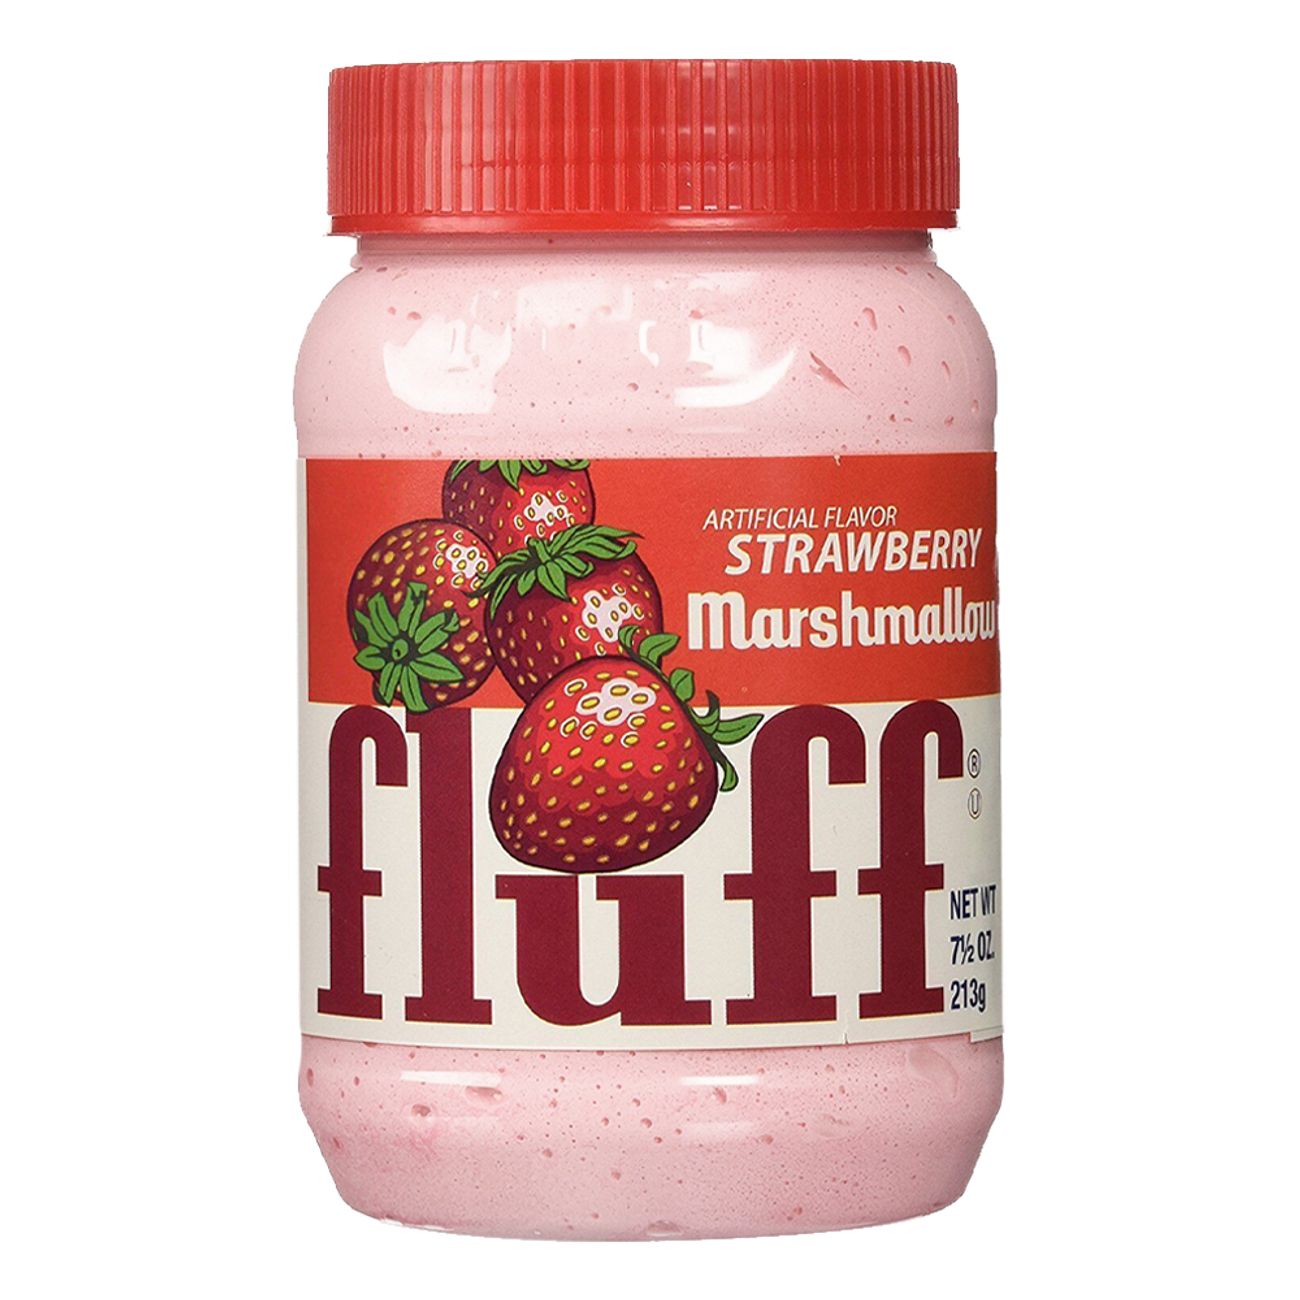 marshmallow-fluff-strawberry-100818-1